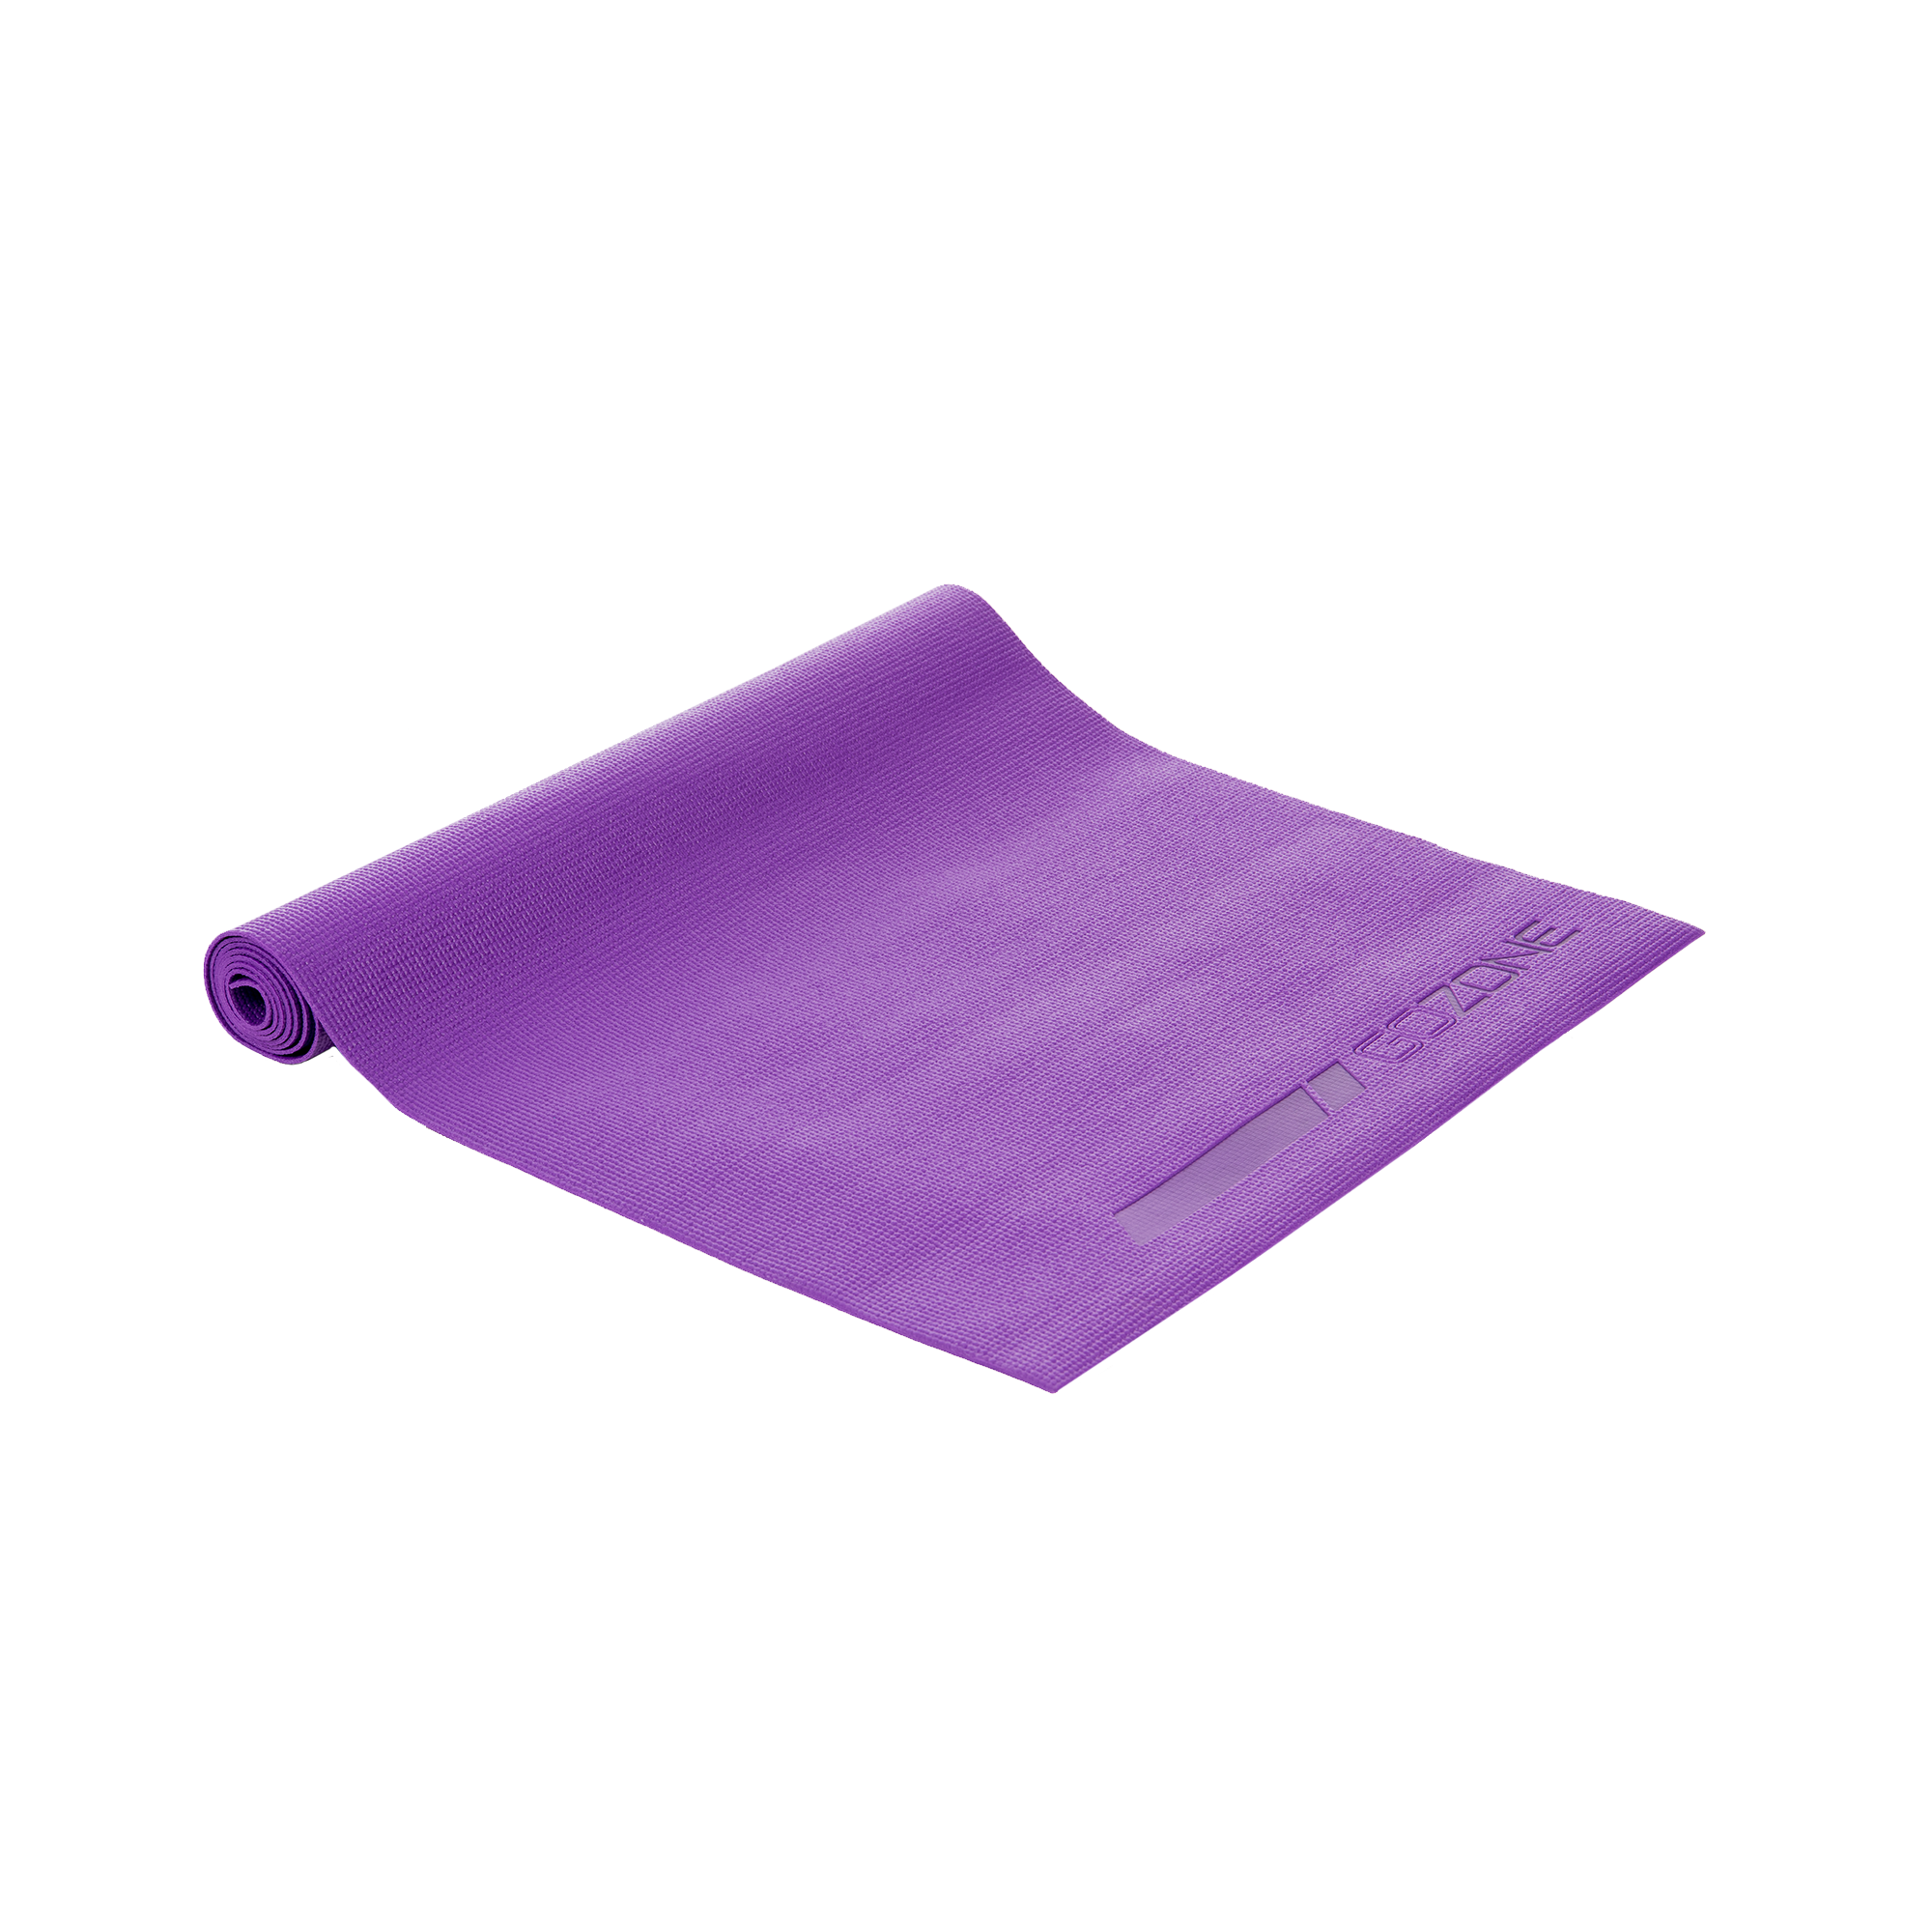 BLOG - What is a PVC yoga mat? - Yogashop